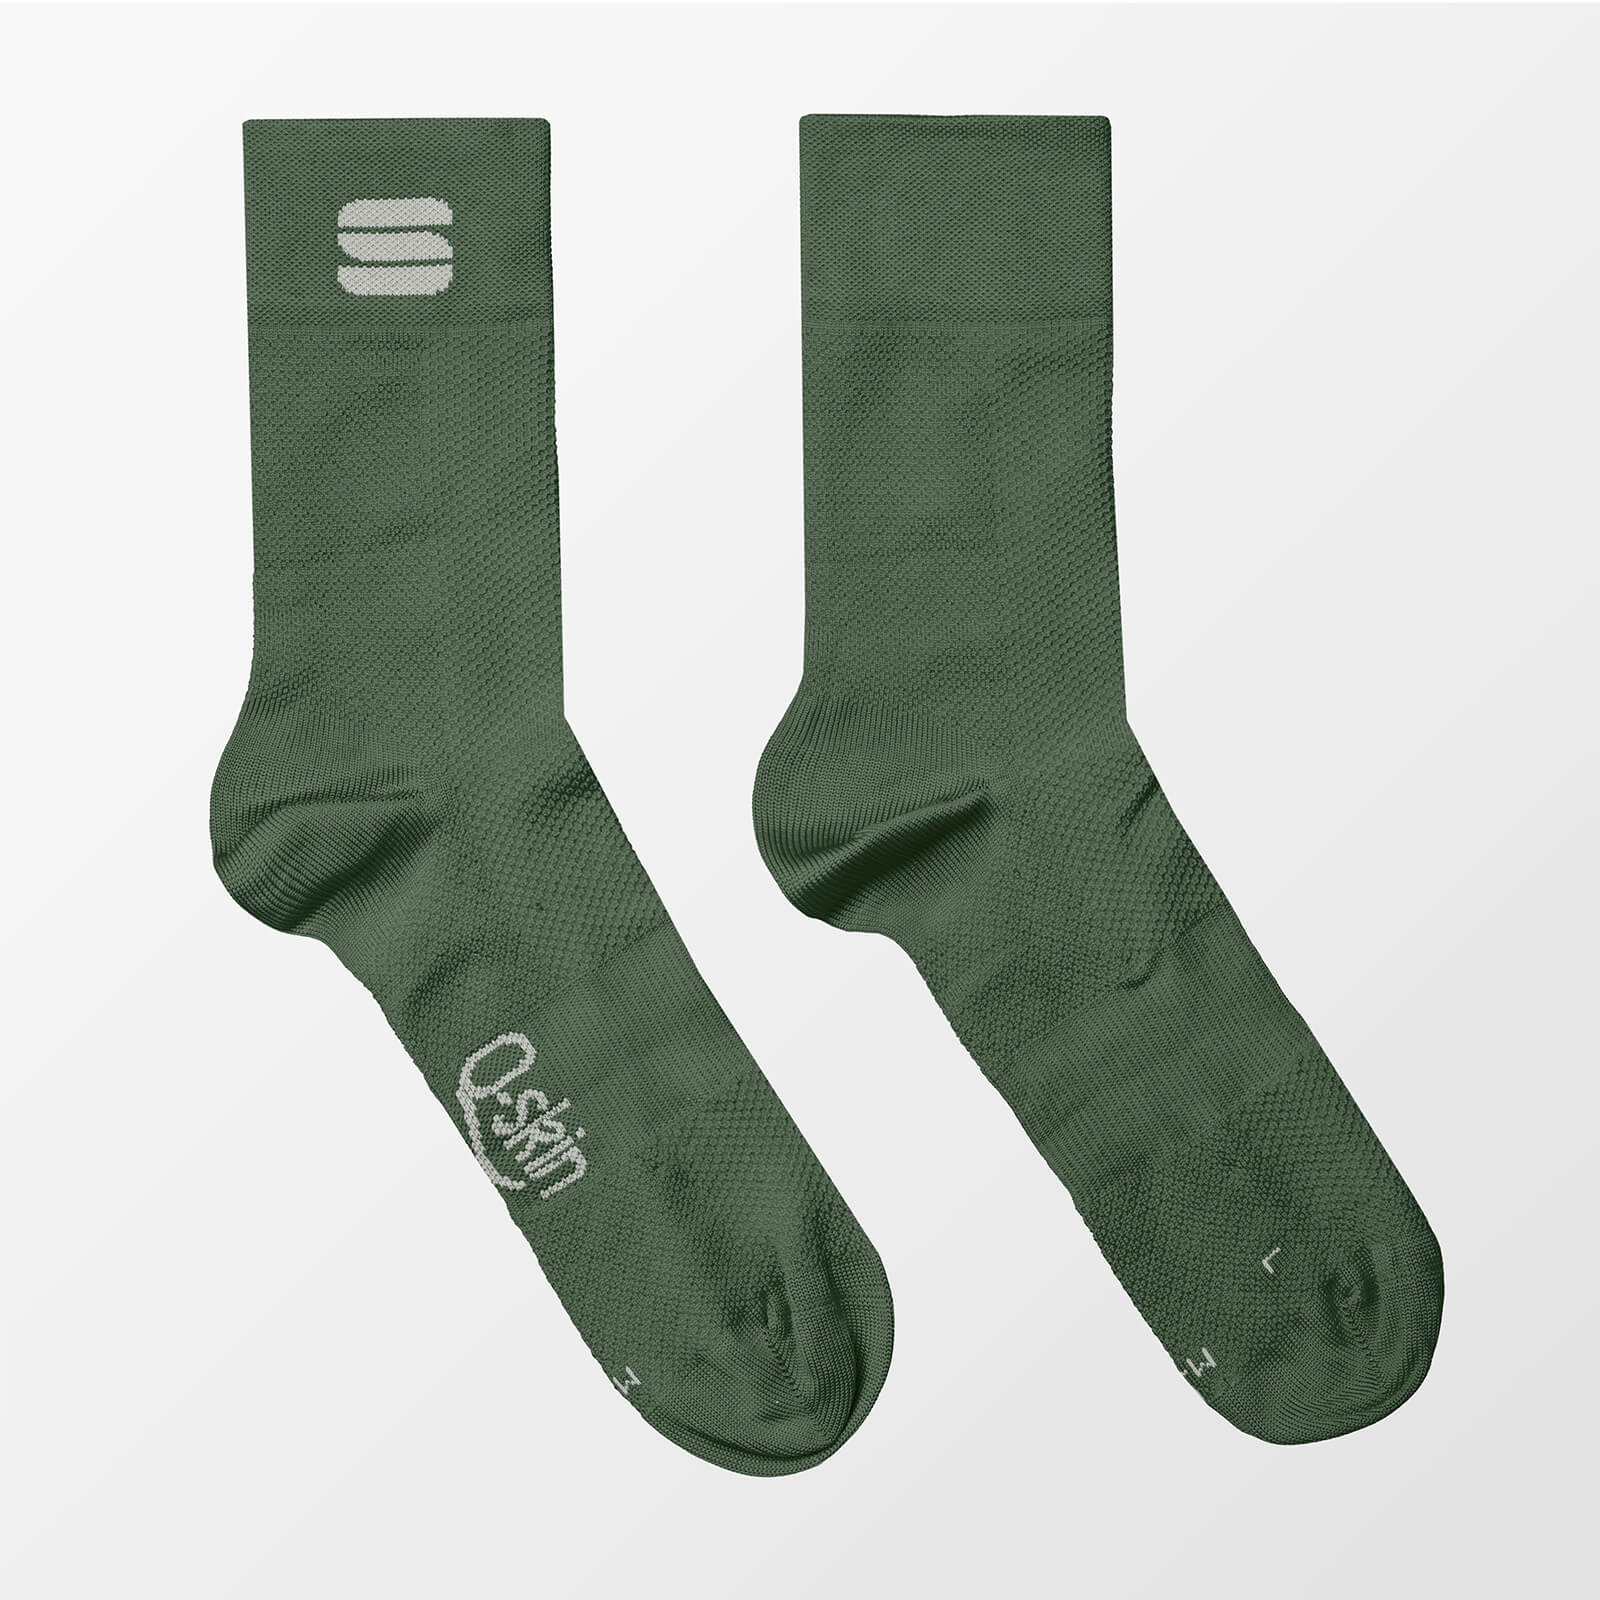 Sportful Matchy Socks - S - Beetle